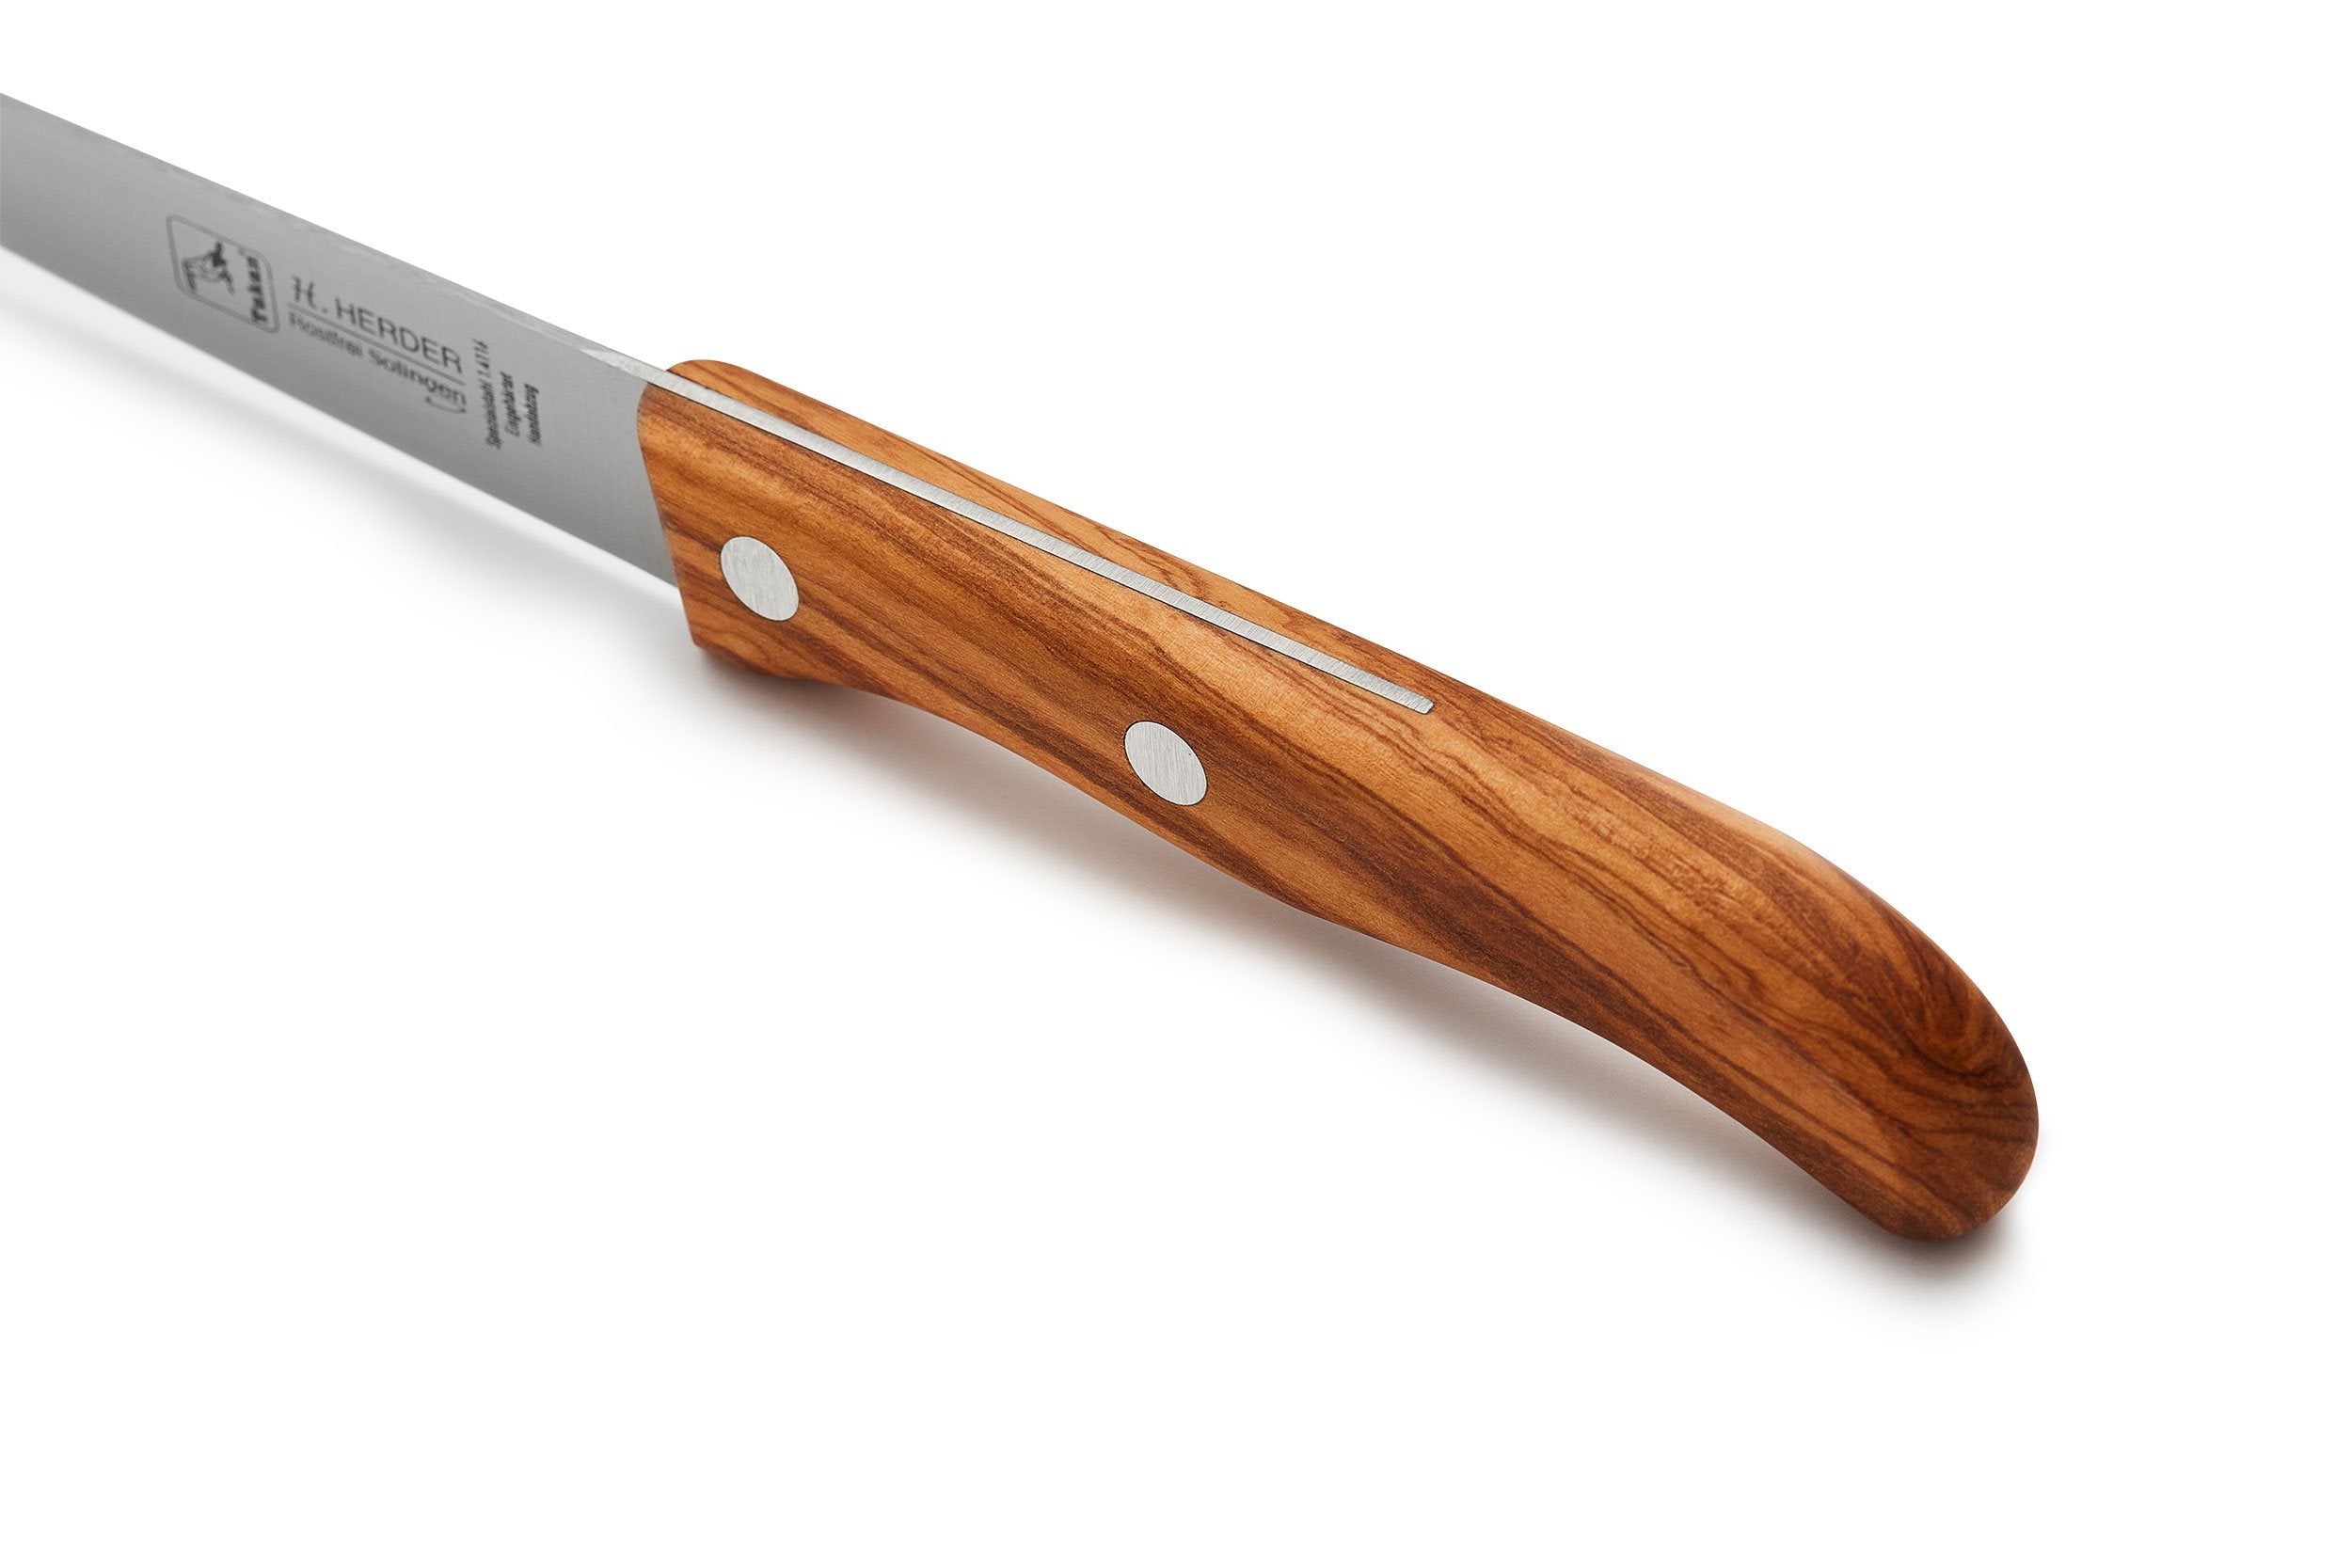 Household knife olive wood handle 10 cm